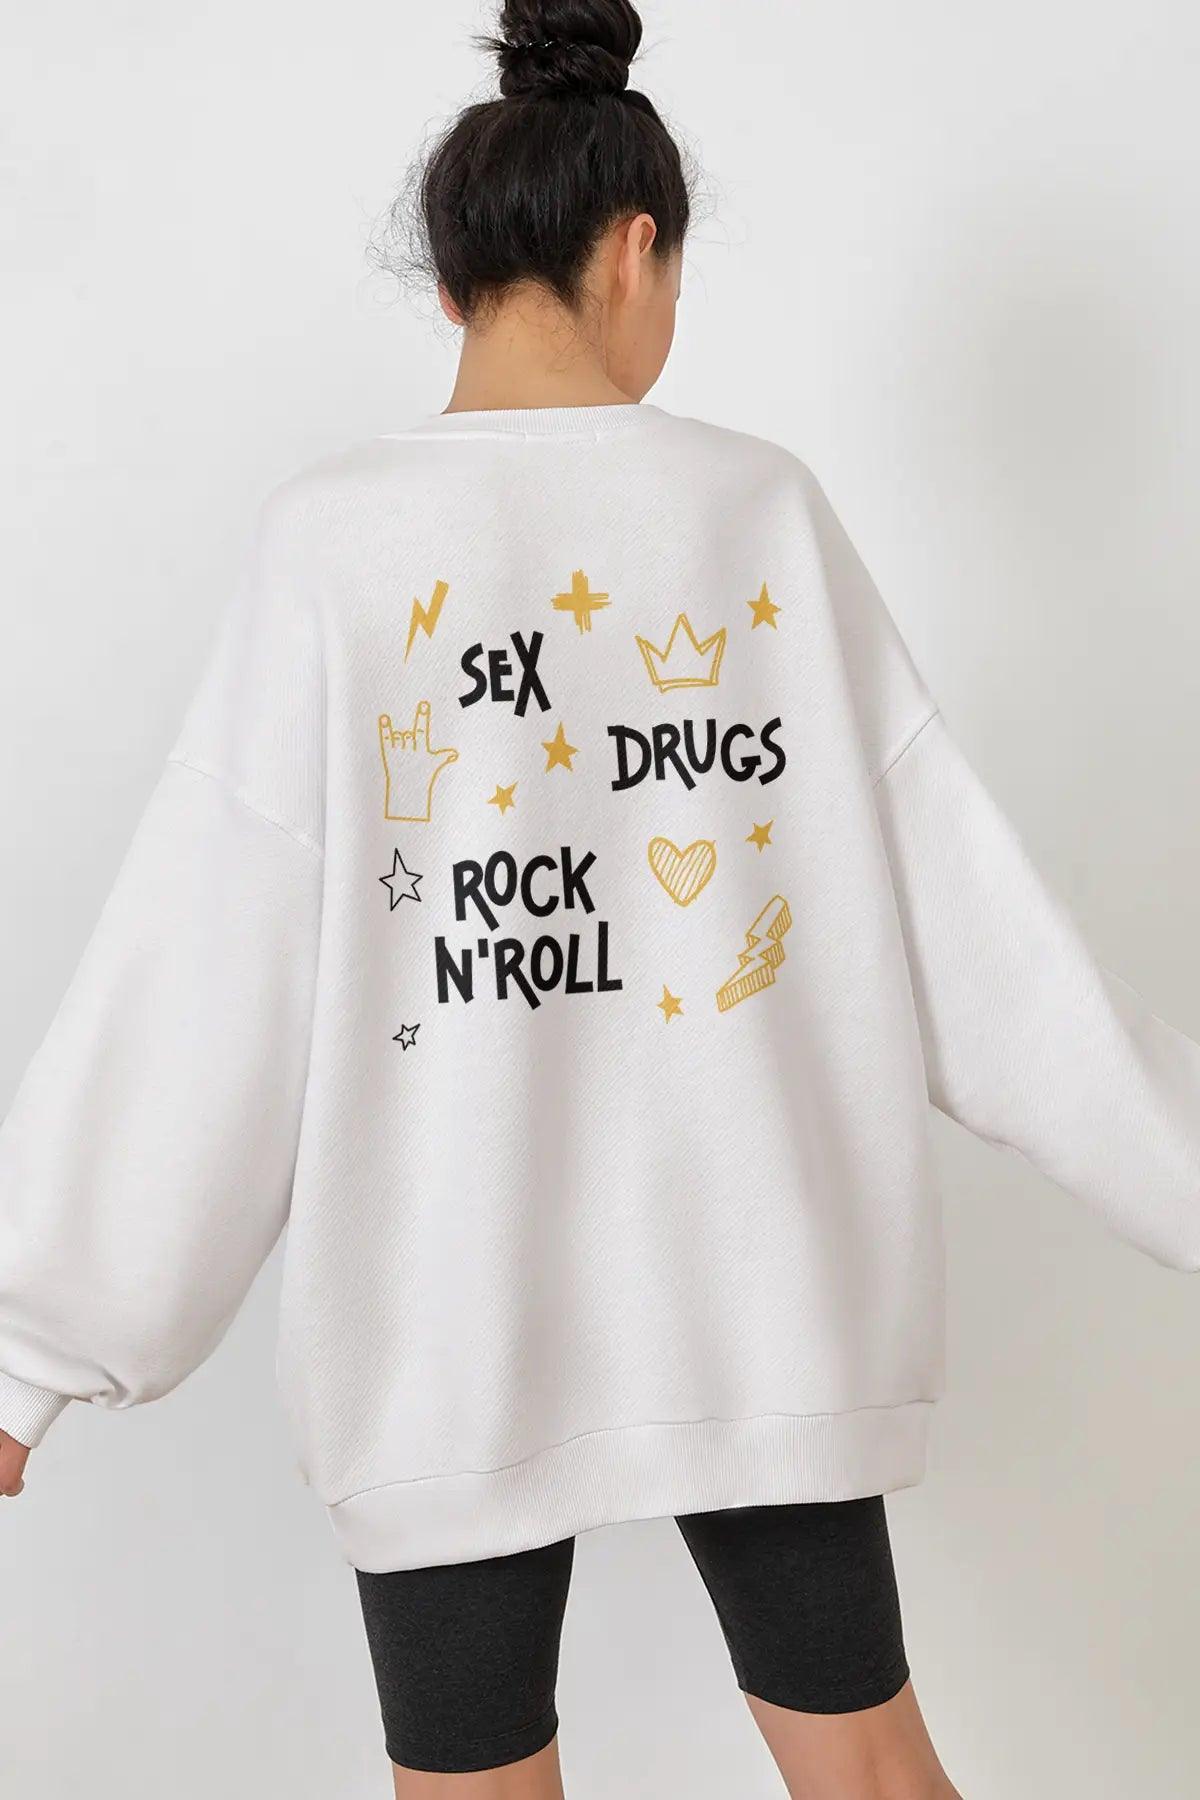 Sex N Drugs Oversize Kadın Sweatshirt - PΛSΛGE